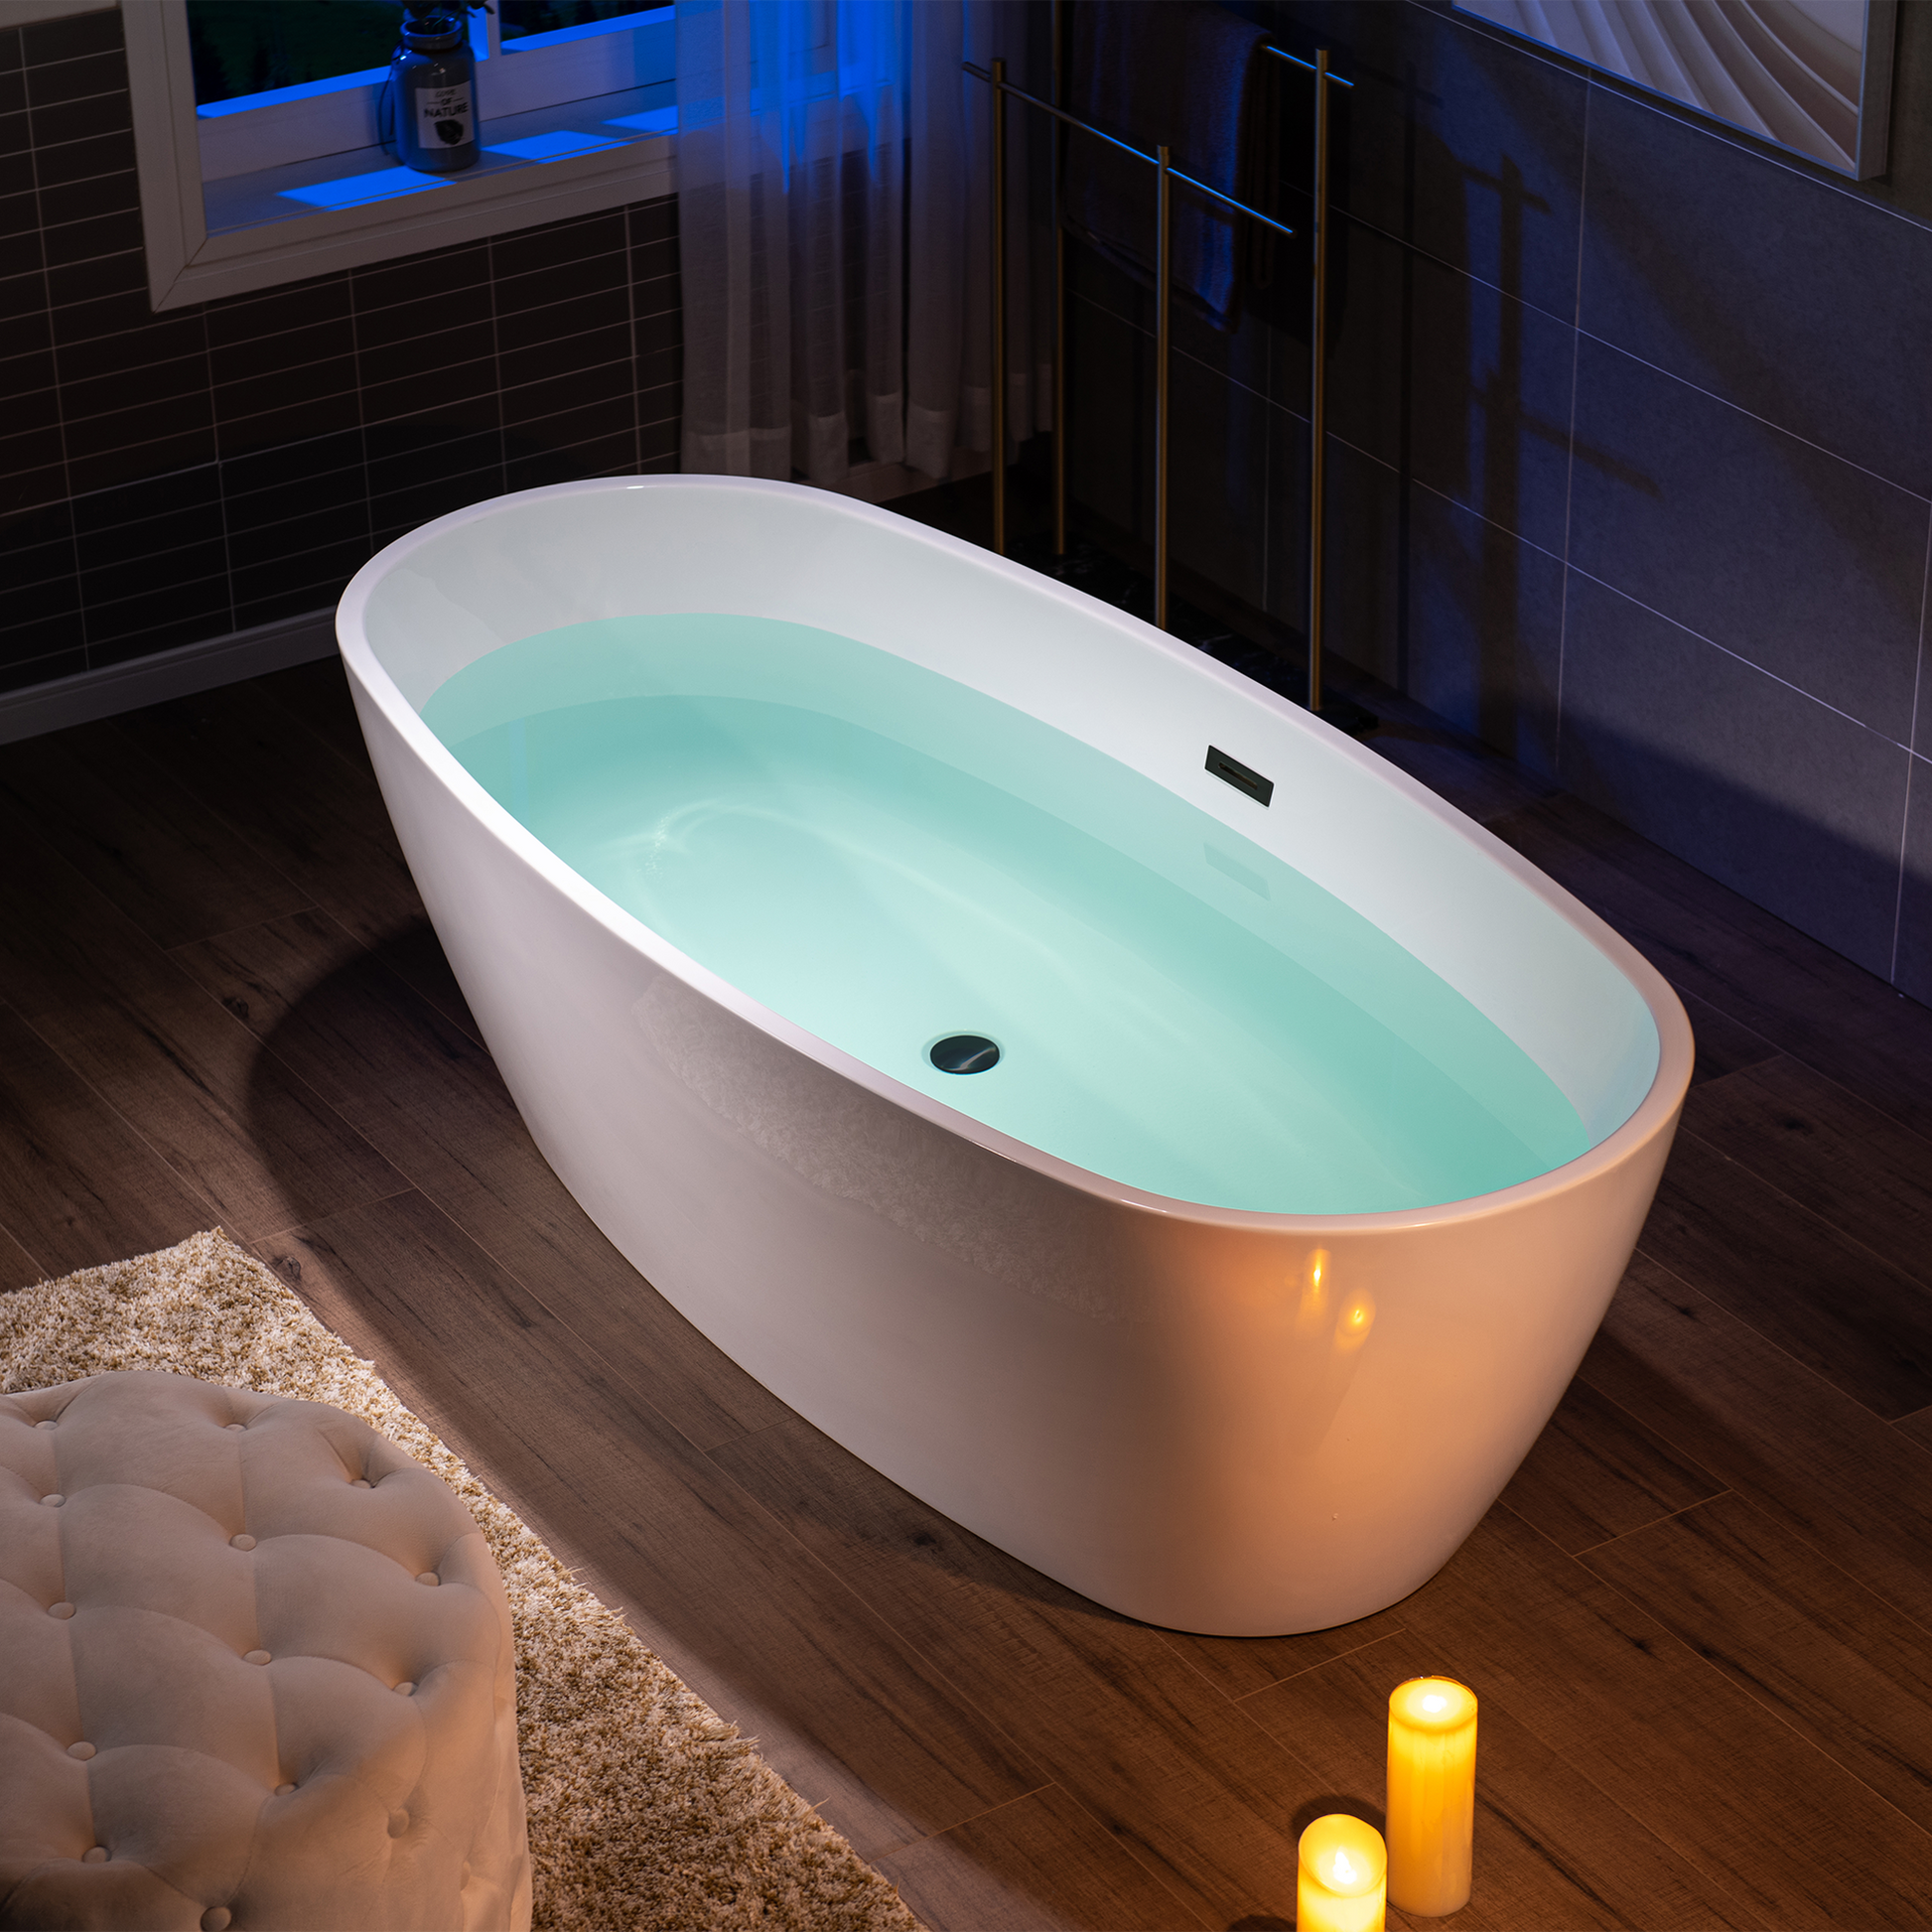 WoodBridge B1538 71" White Acrylic Freestanding Soaking Bathtub With Matte Black Overflow and Drain